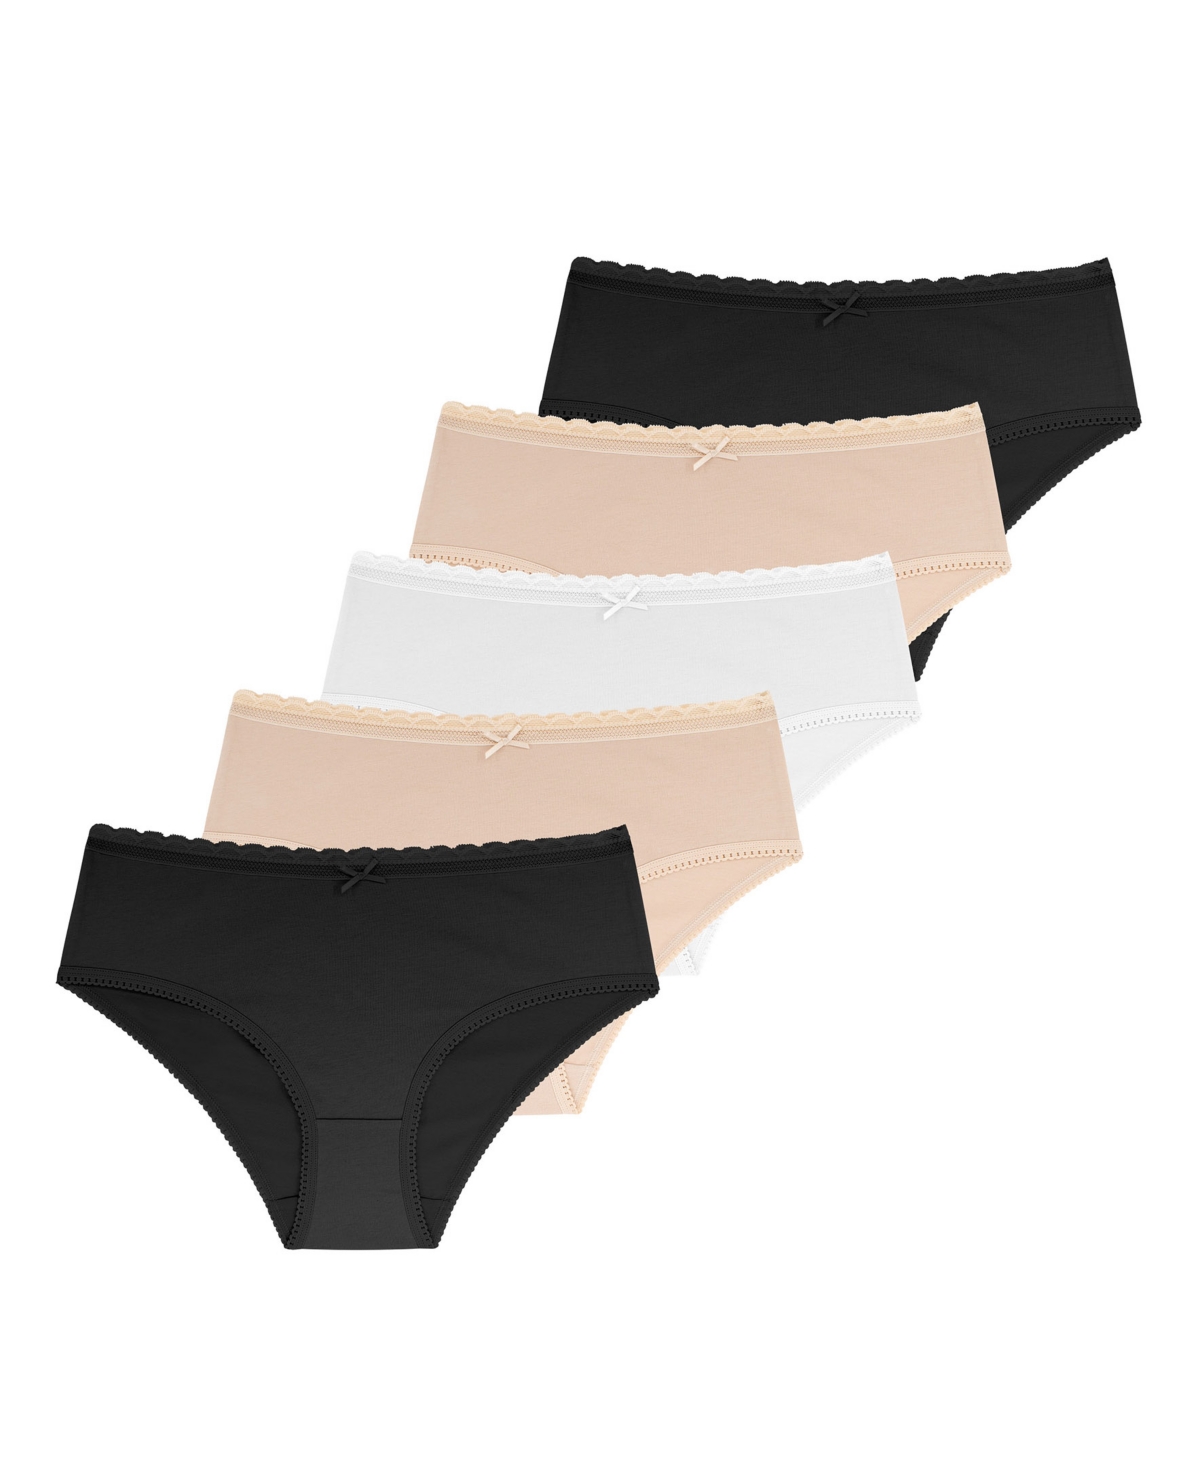 Women's Naomi 5 Pack Soft Cotton Brief Panties - Black, Beige, Ivory, Beige, Black